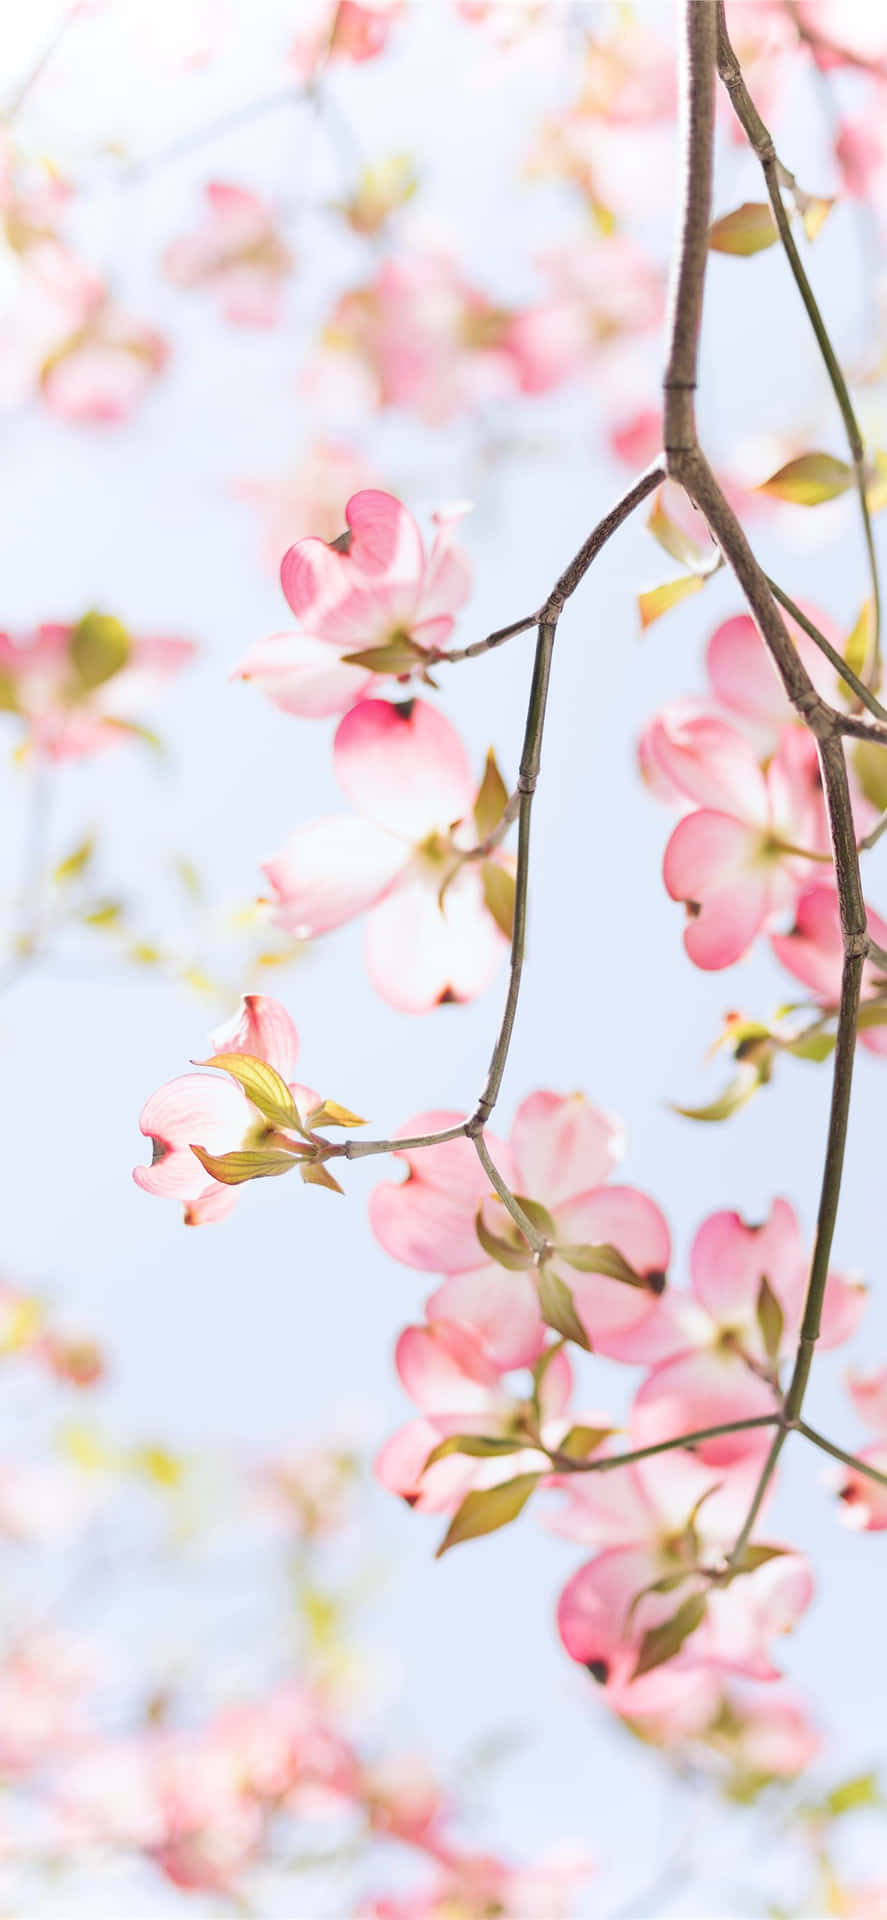 Pink dogwood blomster mod en blå himmel Wallpaper